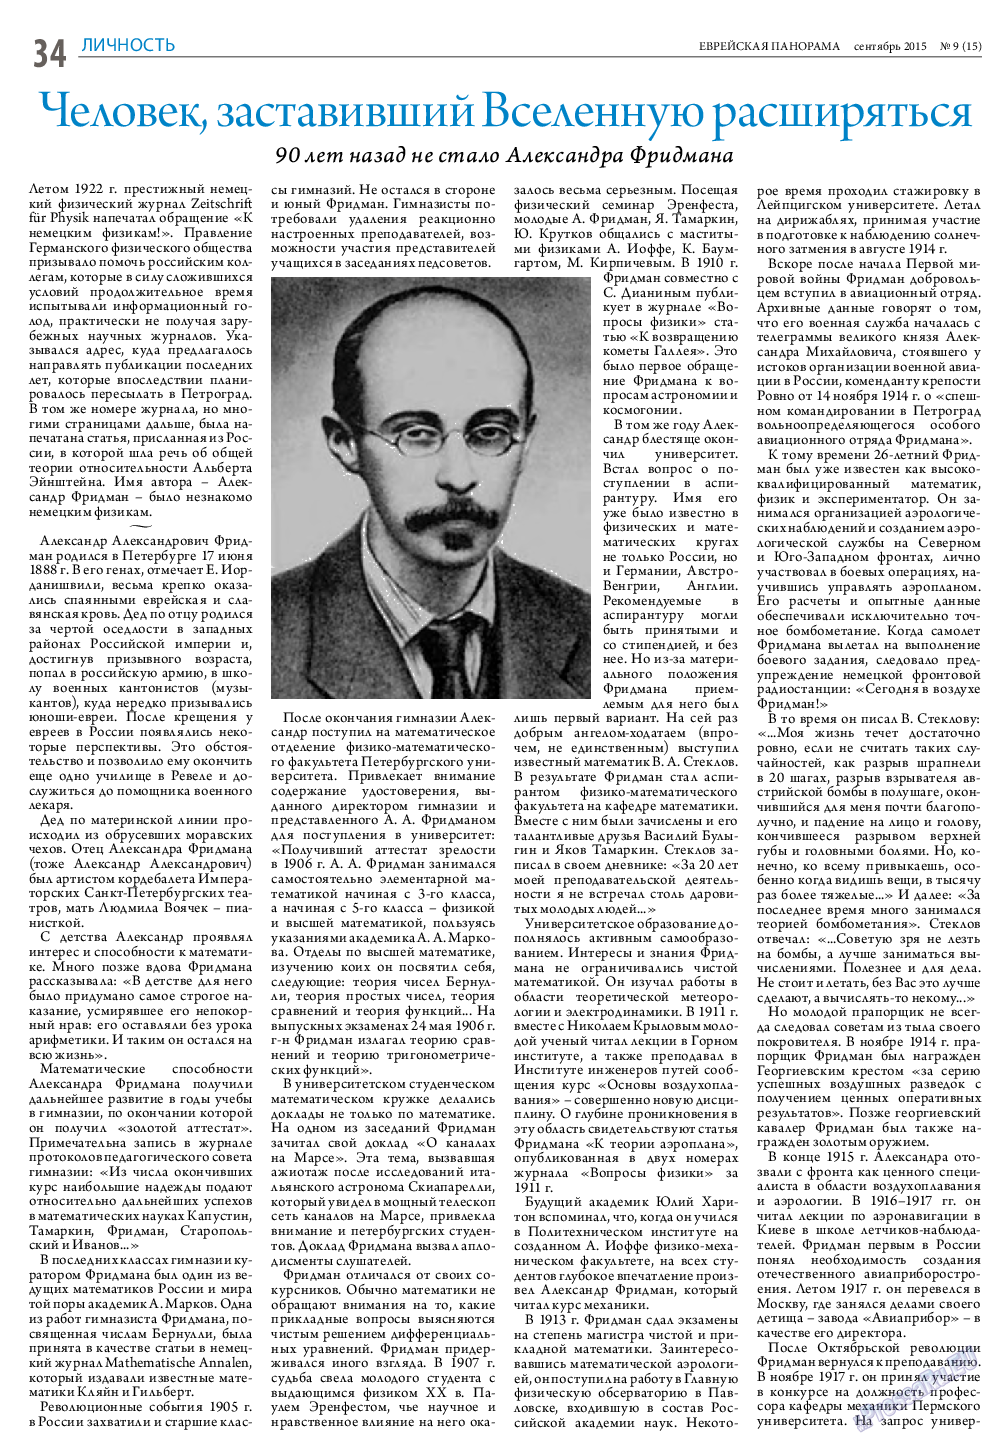 Еврейская панорама, газета. 2015 №9 стр.34